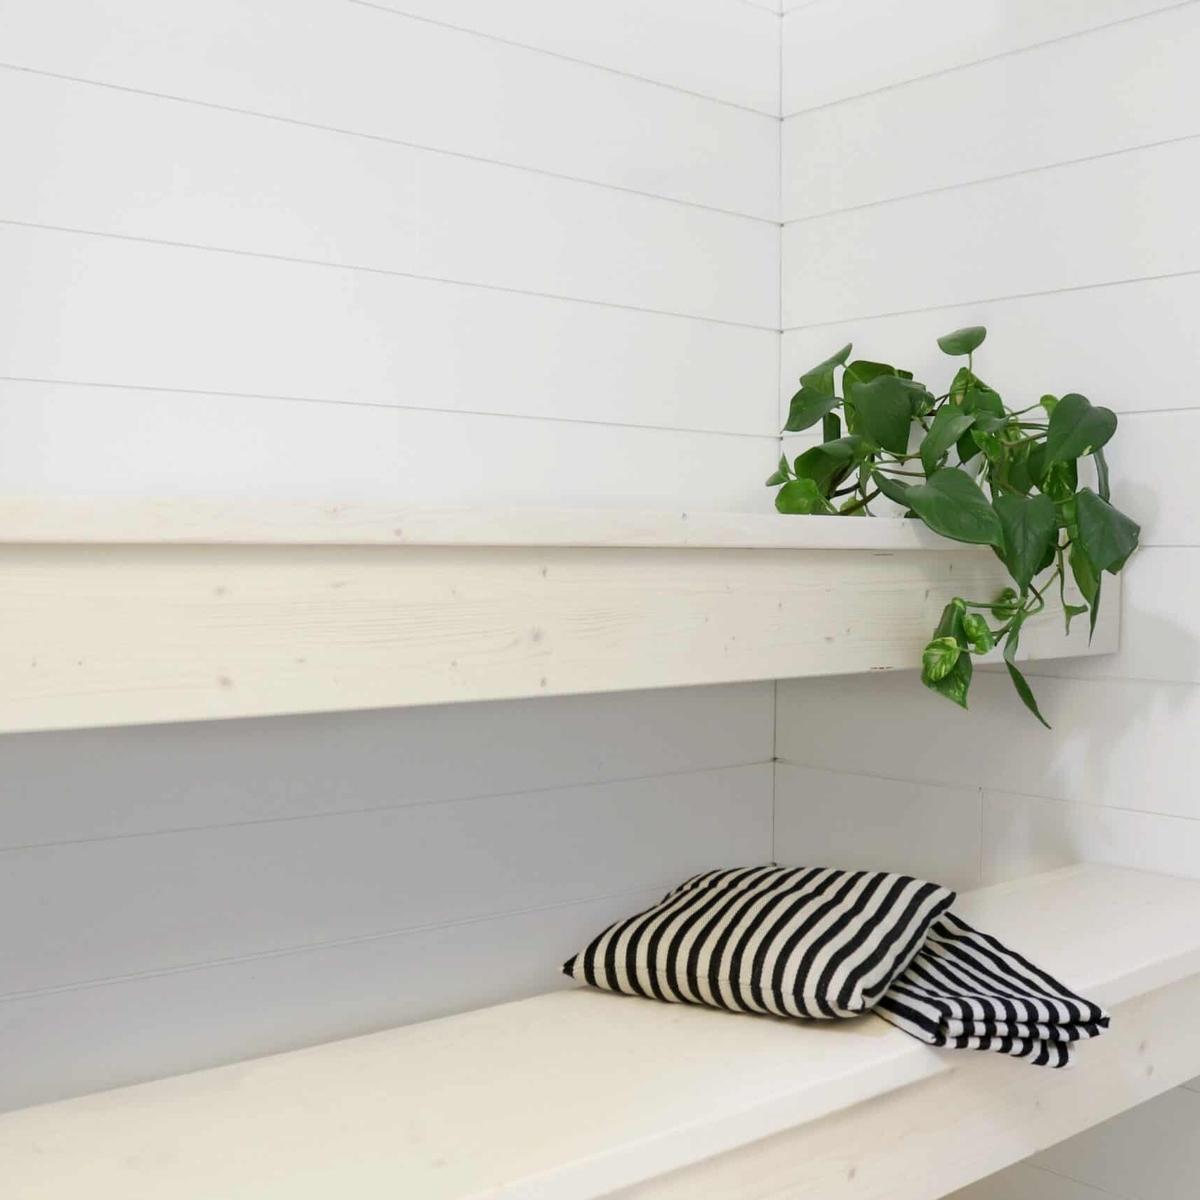 Siparila: Kuulas Wood Interior/Sauna Panels – "White"